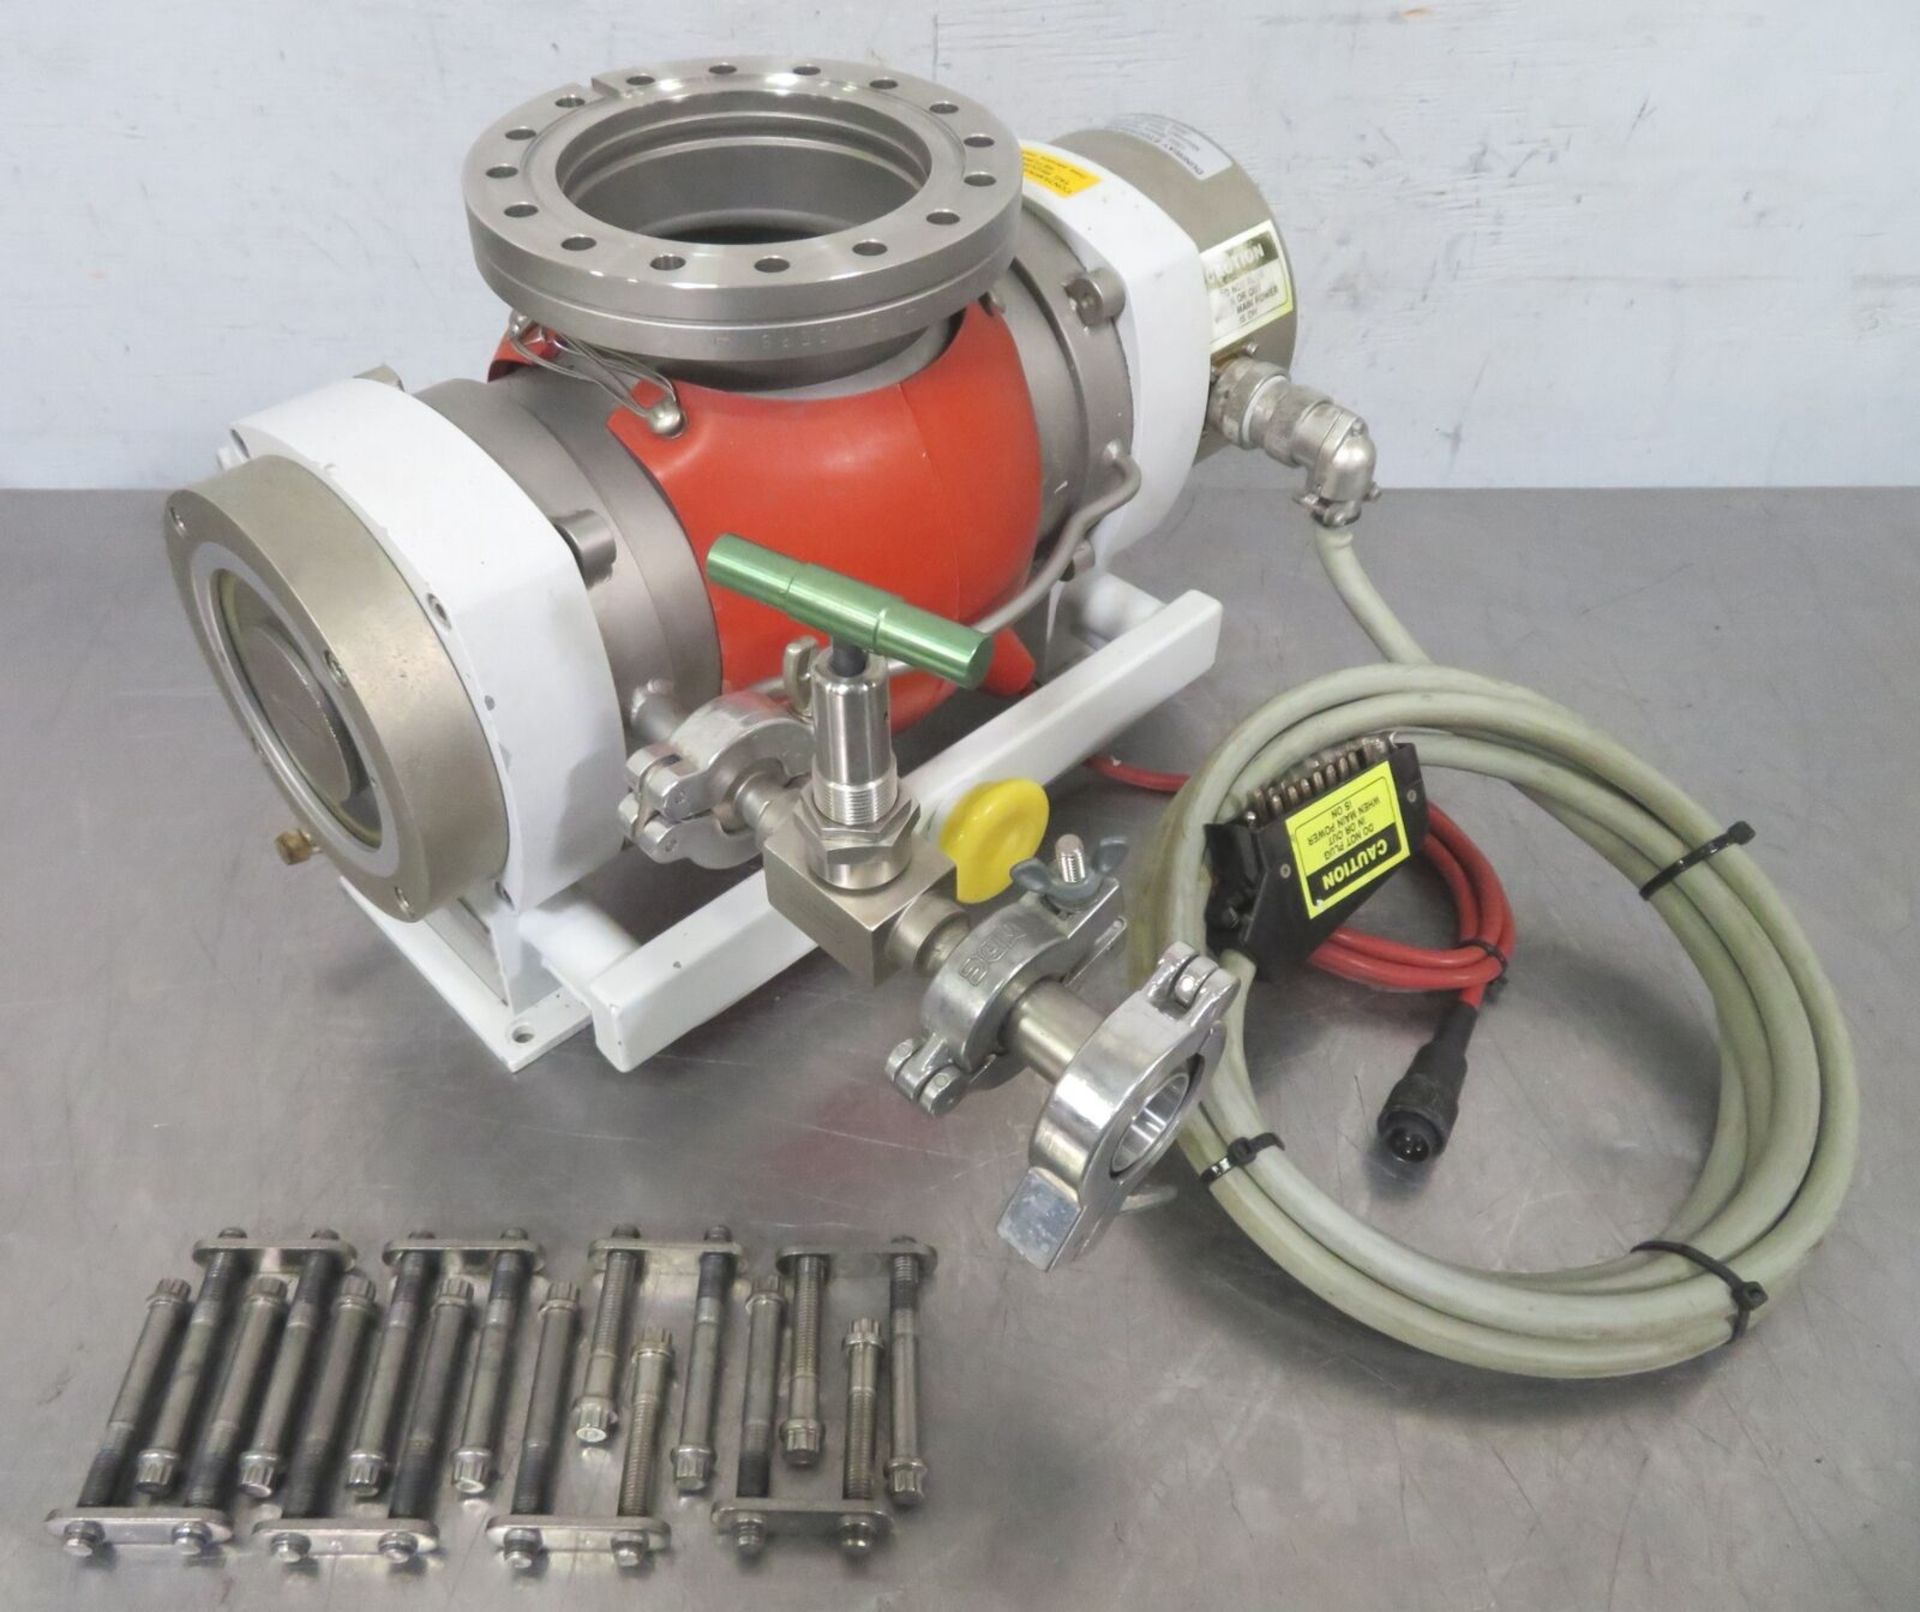 Pfeiffer Balzers TPU330 Turbo Vacuum Pump w/ 6" CF Conflat Flange, Cable - Gilroy